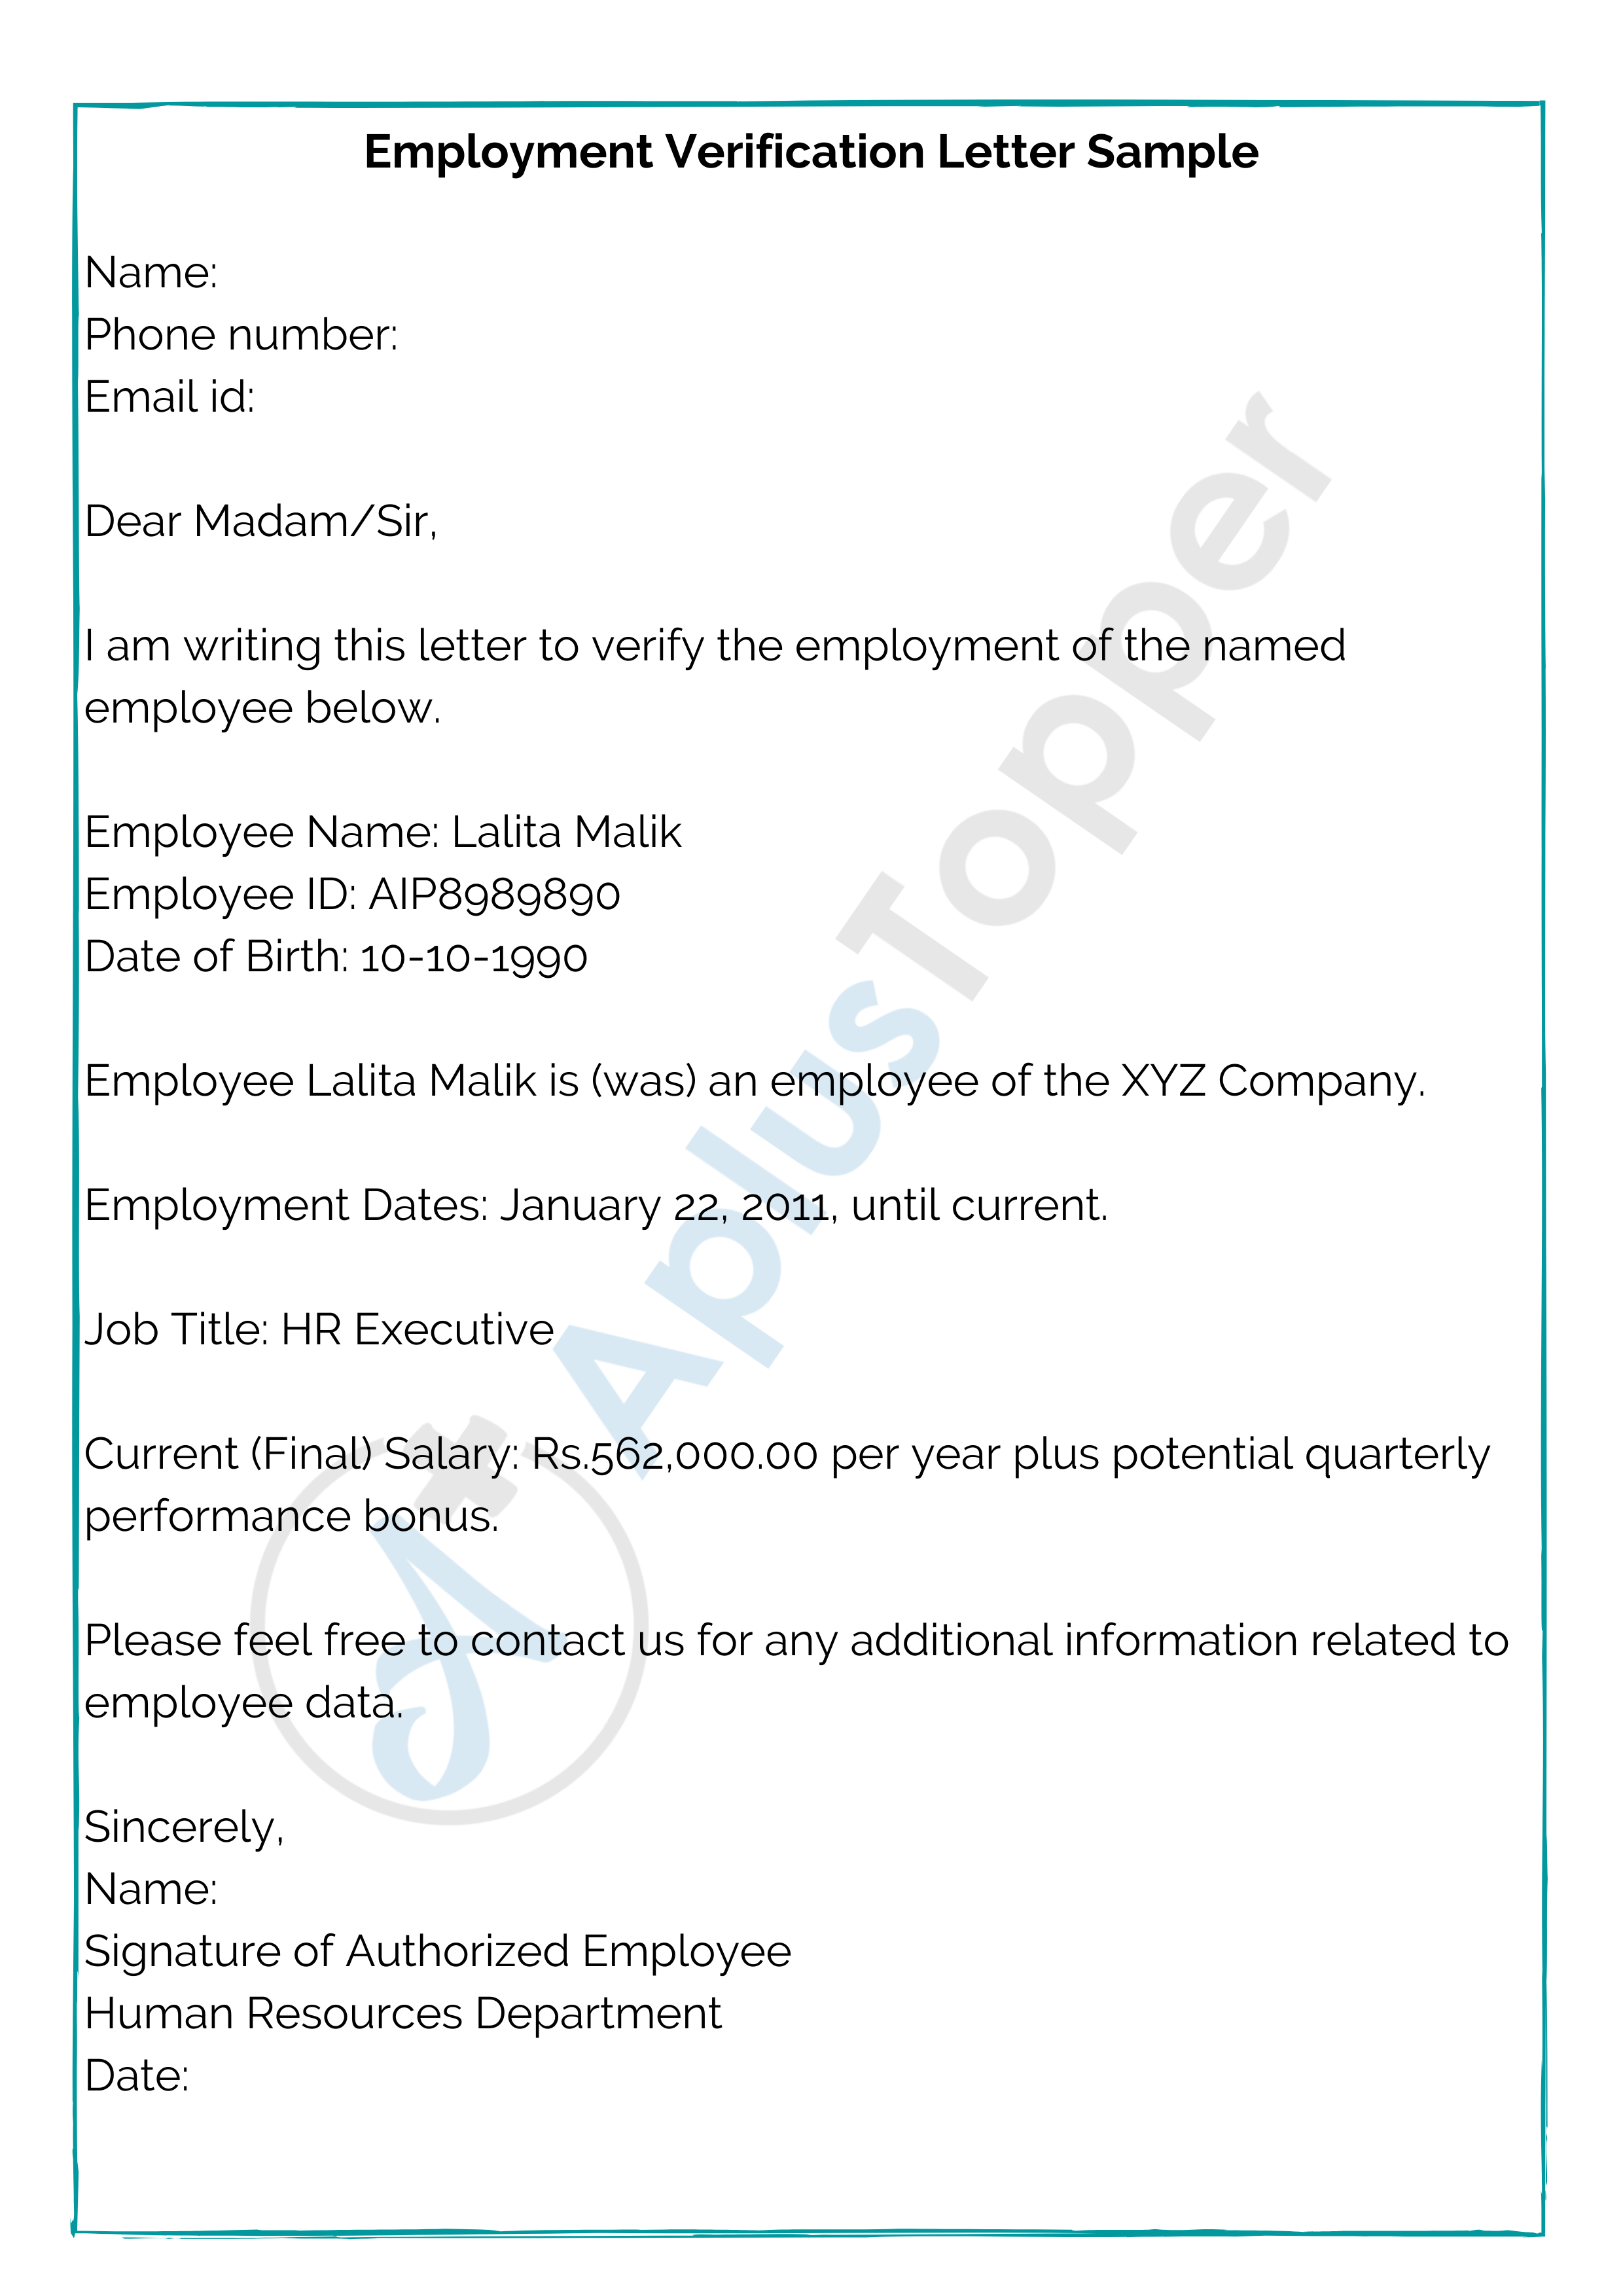 Employment Verification Letter | Format, Sample and Need of Employment  Verification Letter - A Plus Topper